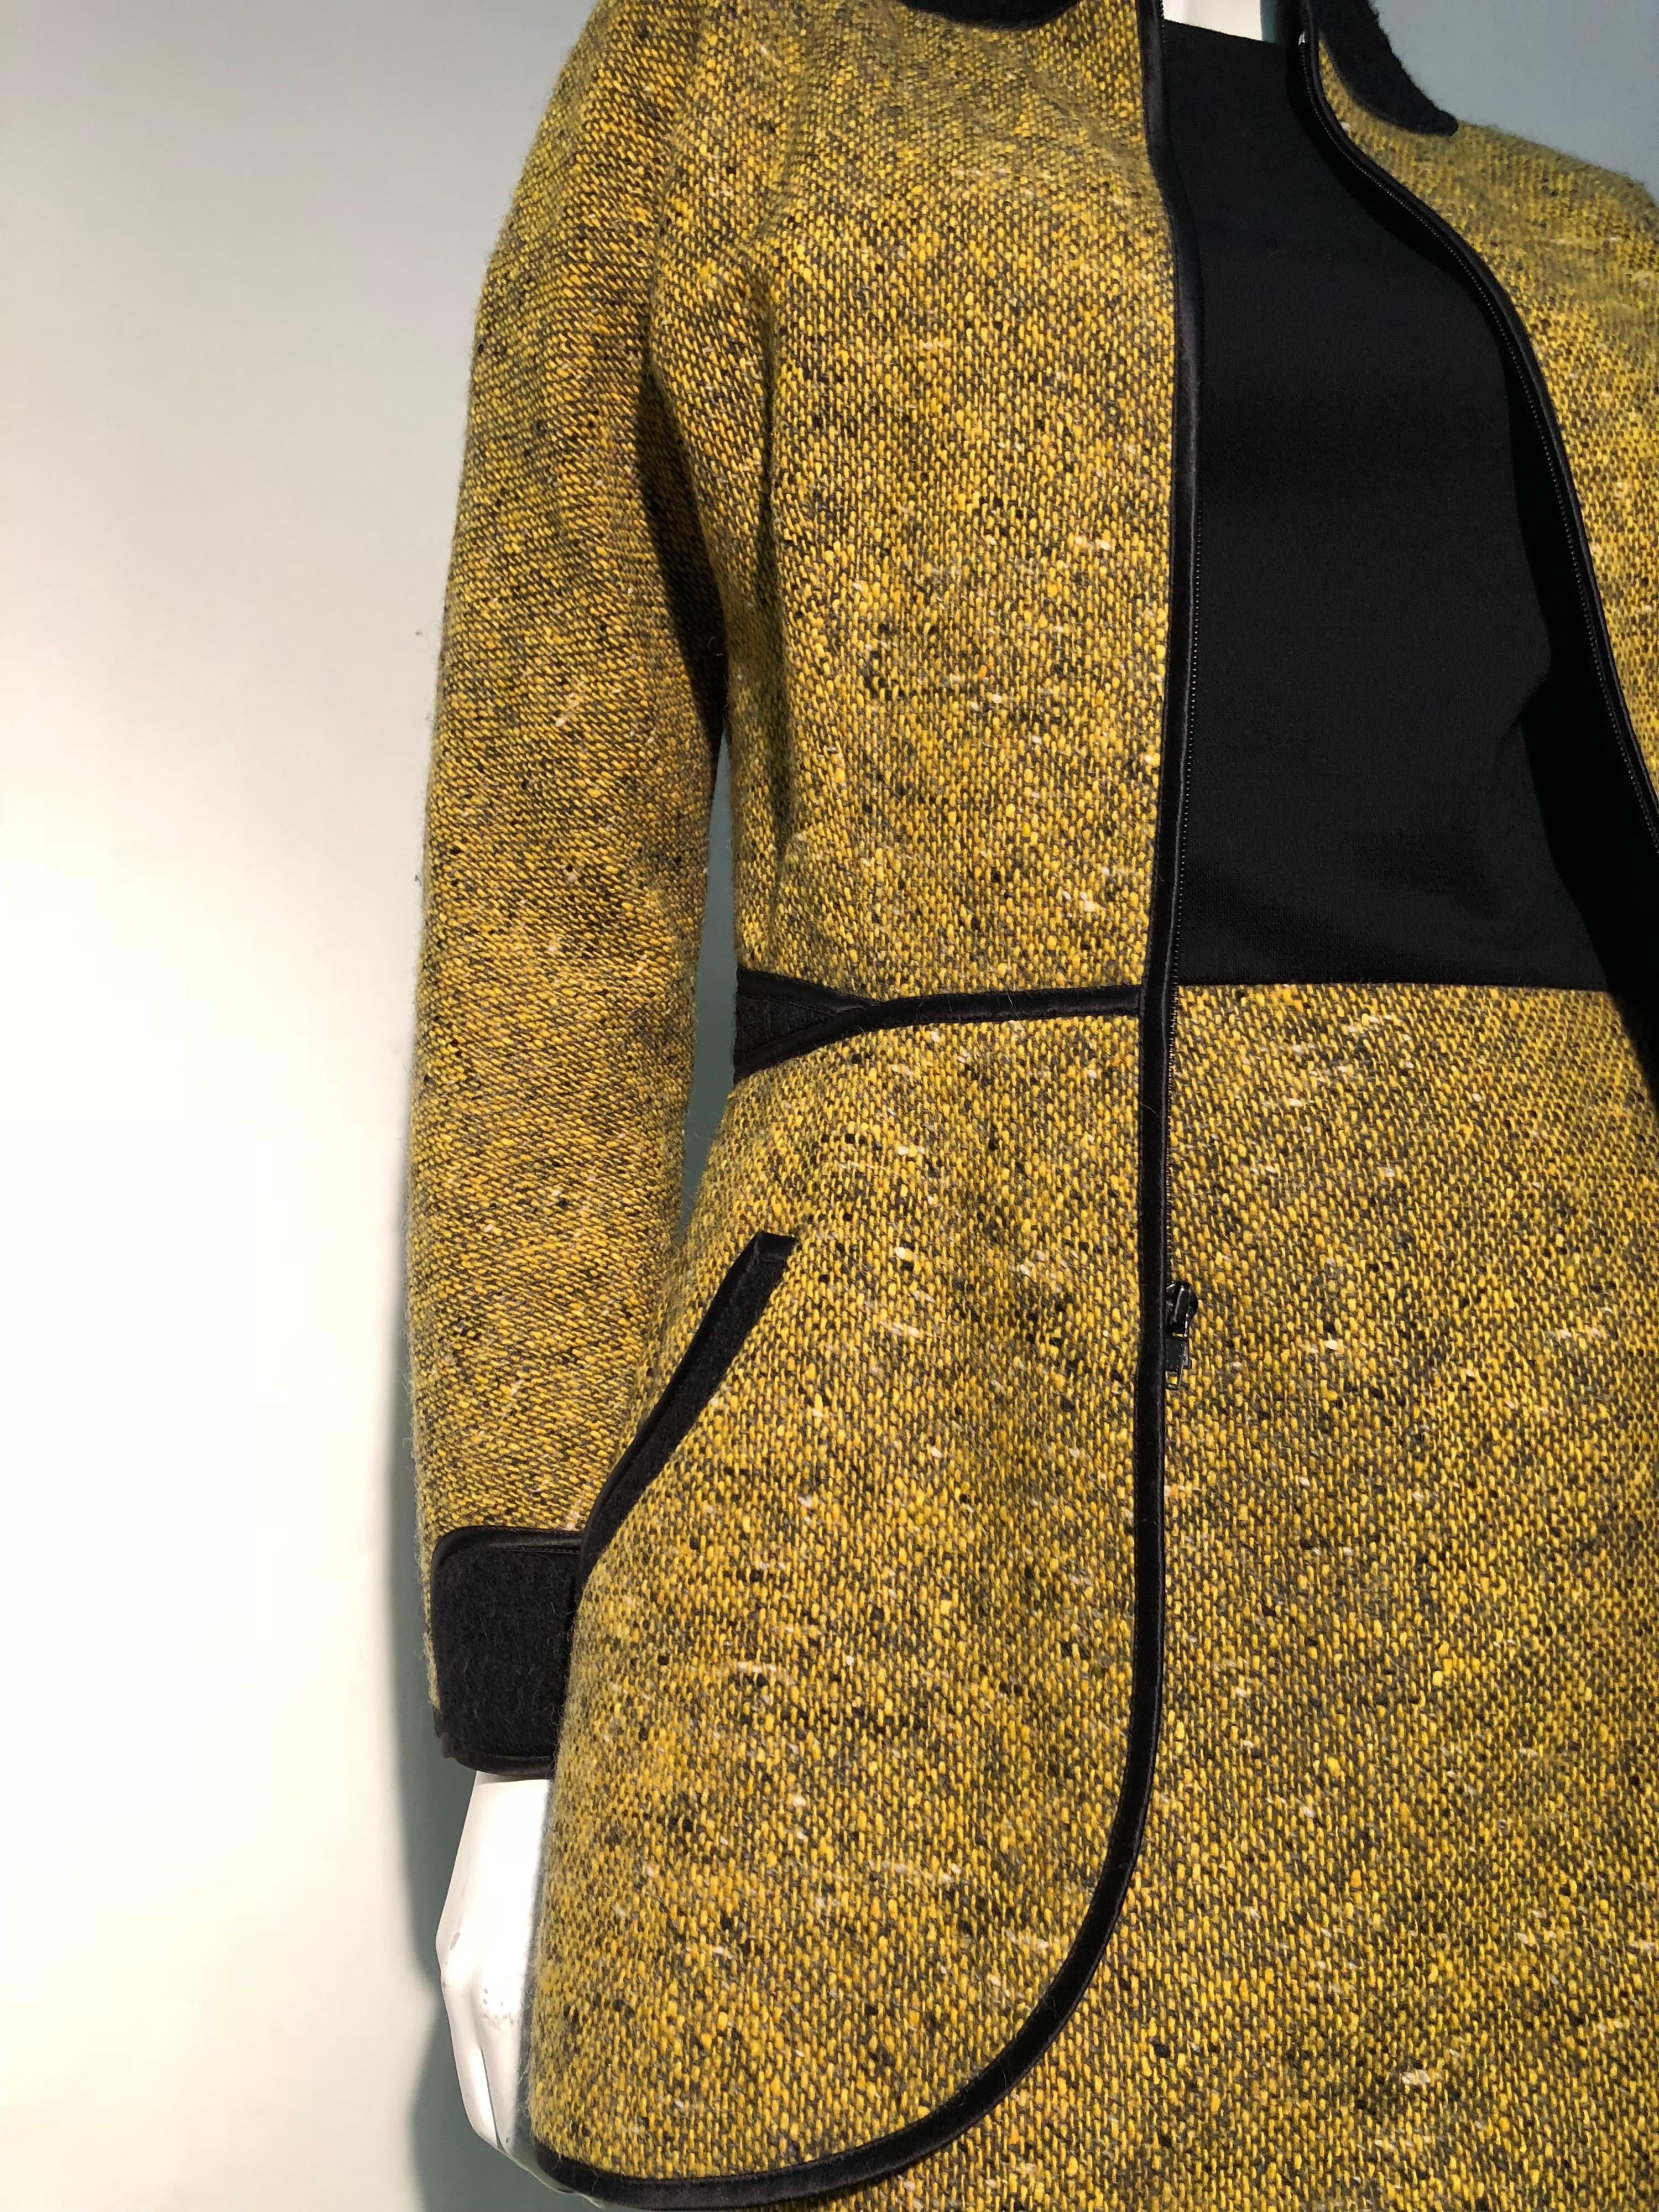 1990s Geoffrey Beene Goldenrod & Black Wool 2-Piece Tweed Dress and Jacket  For Sale 3